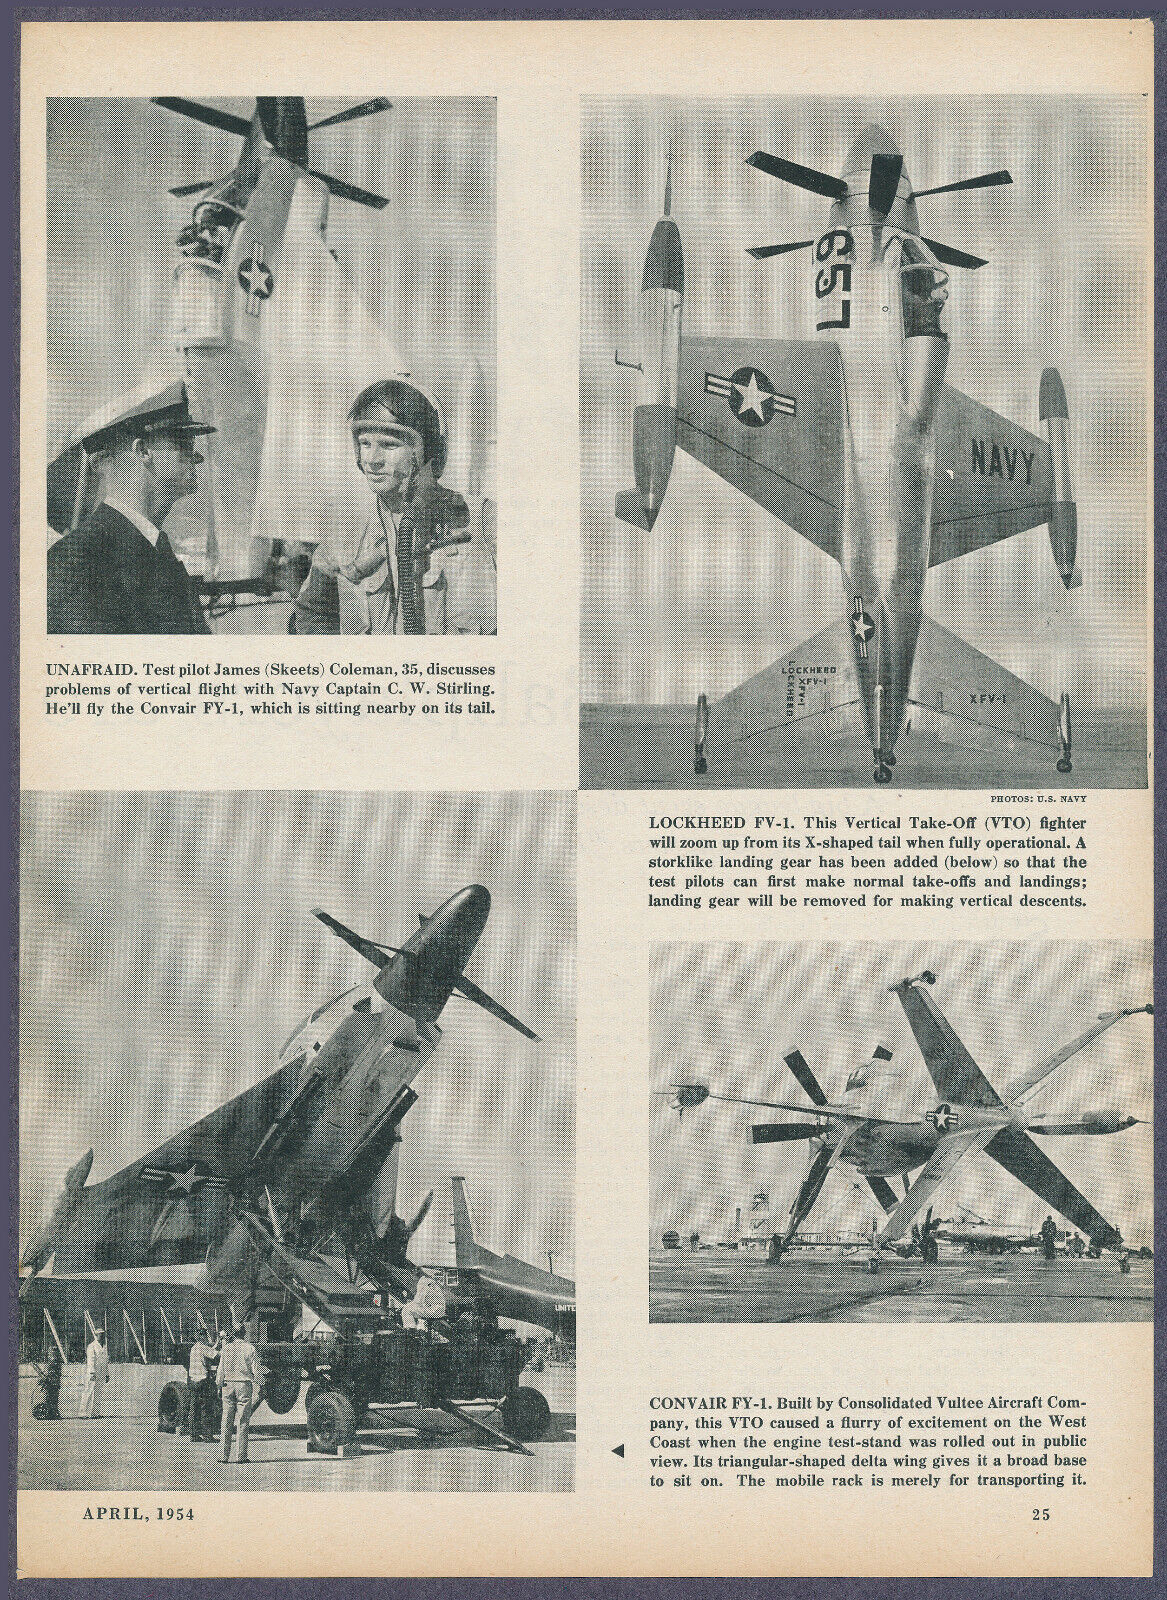 Us Navy Vtol History Bell Lockheed Convair Vintage Print Article 1954 3 Pages